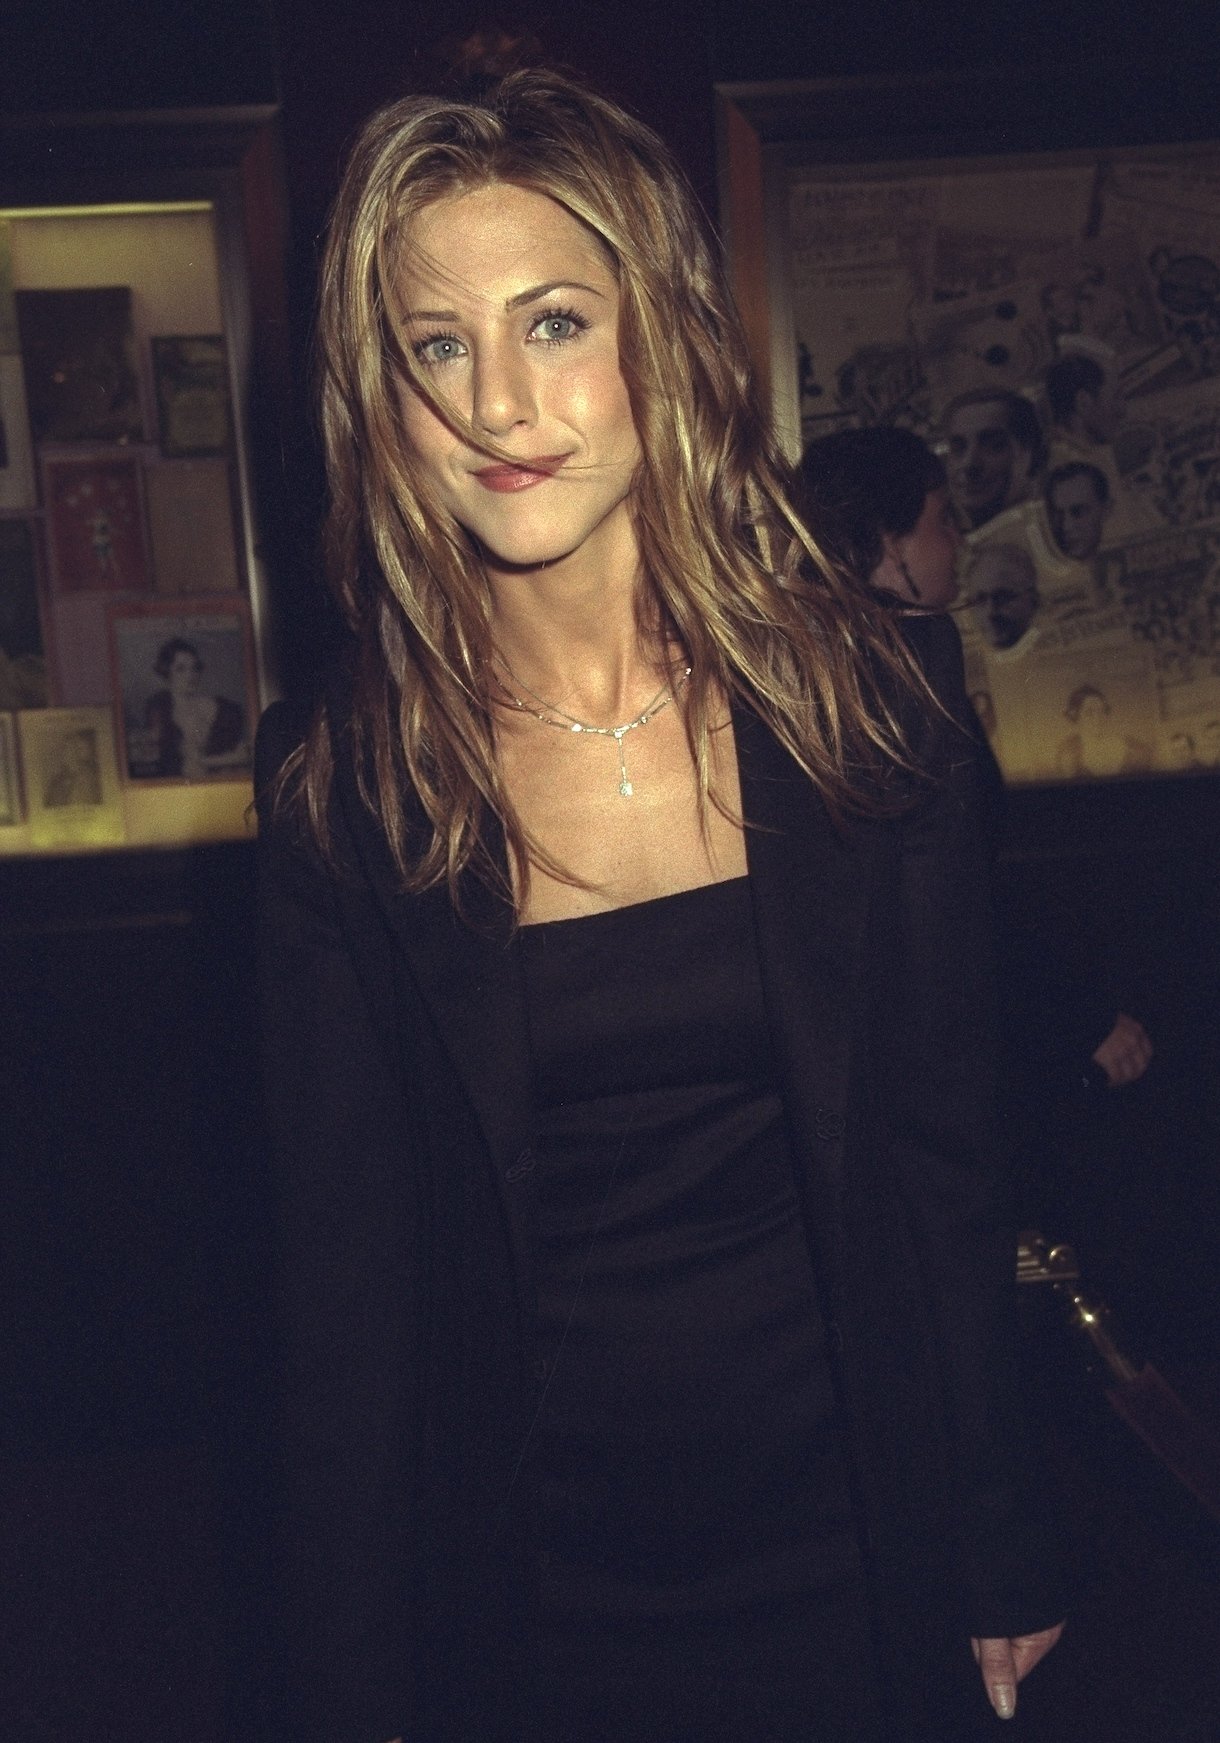 Jennifer Aniston attending movie premiere of "Meet Joe Black" at the Ziegfeld Theater